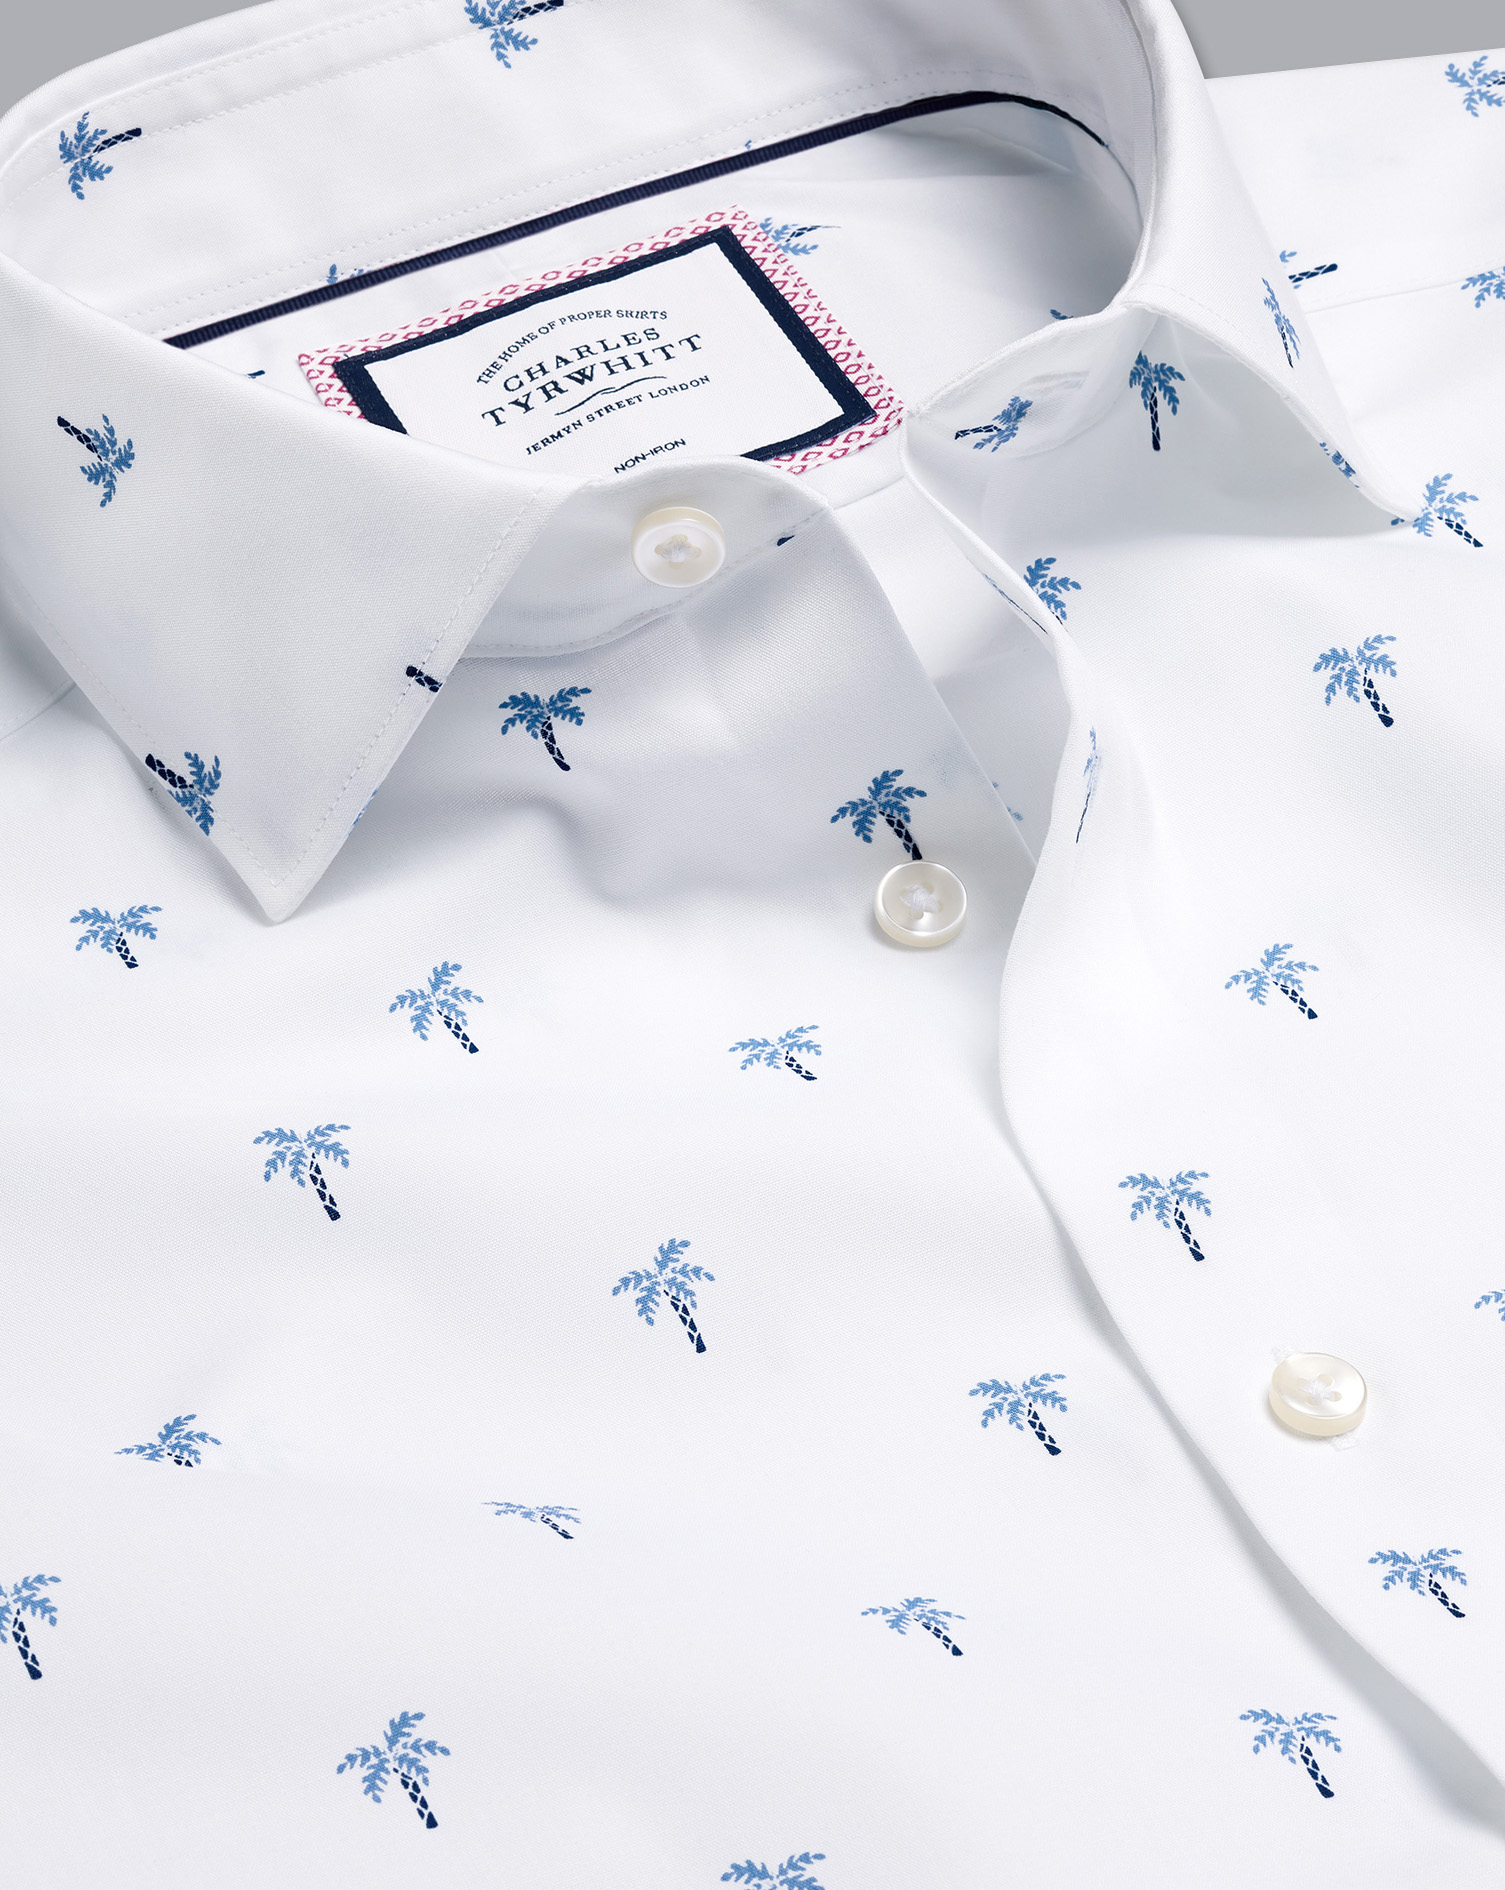 Mens Shirt Tokyo Laundry STRETTON Palm Tree Print Short Sleeve Summer Top New